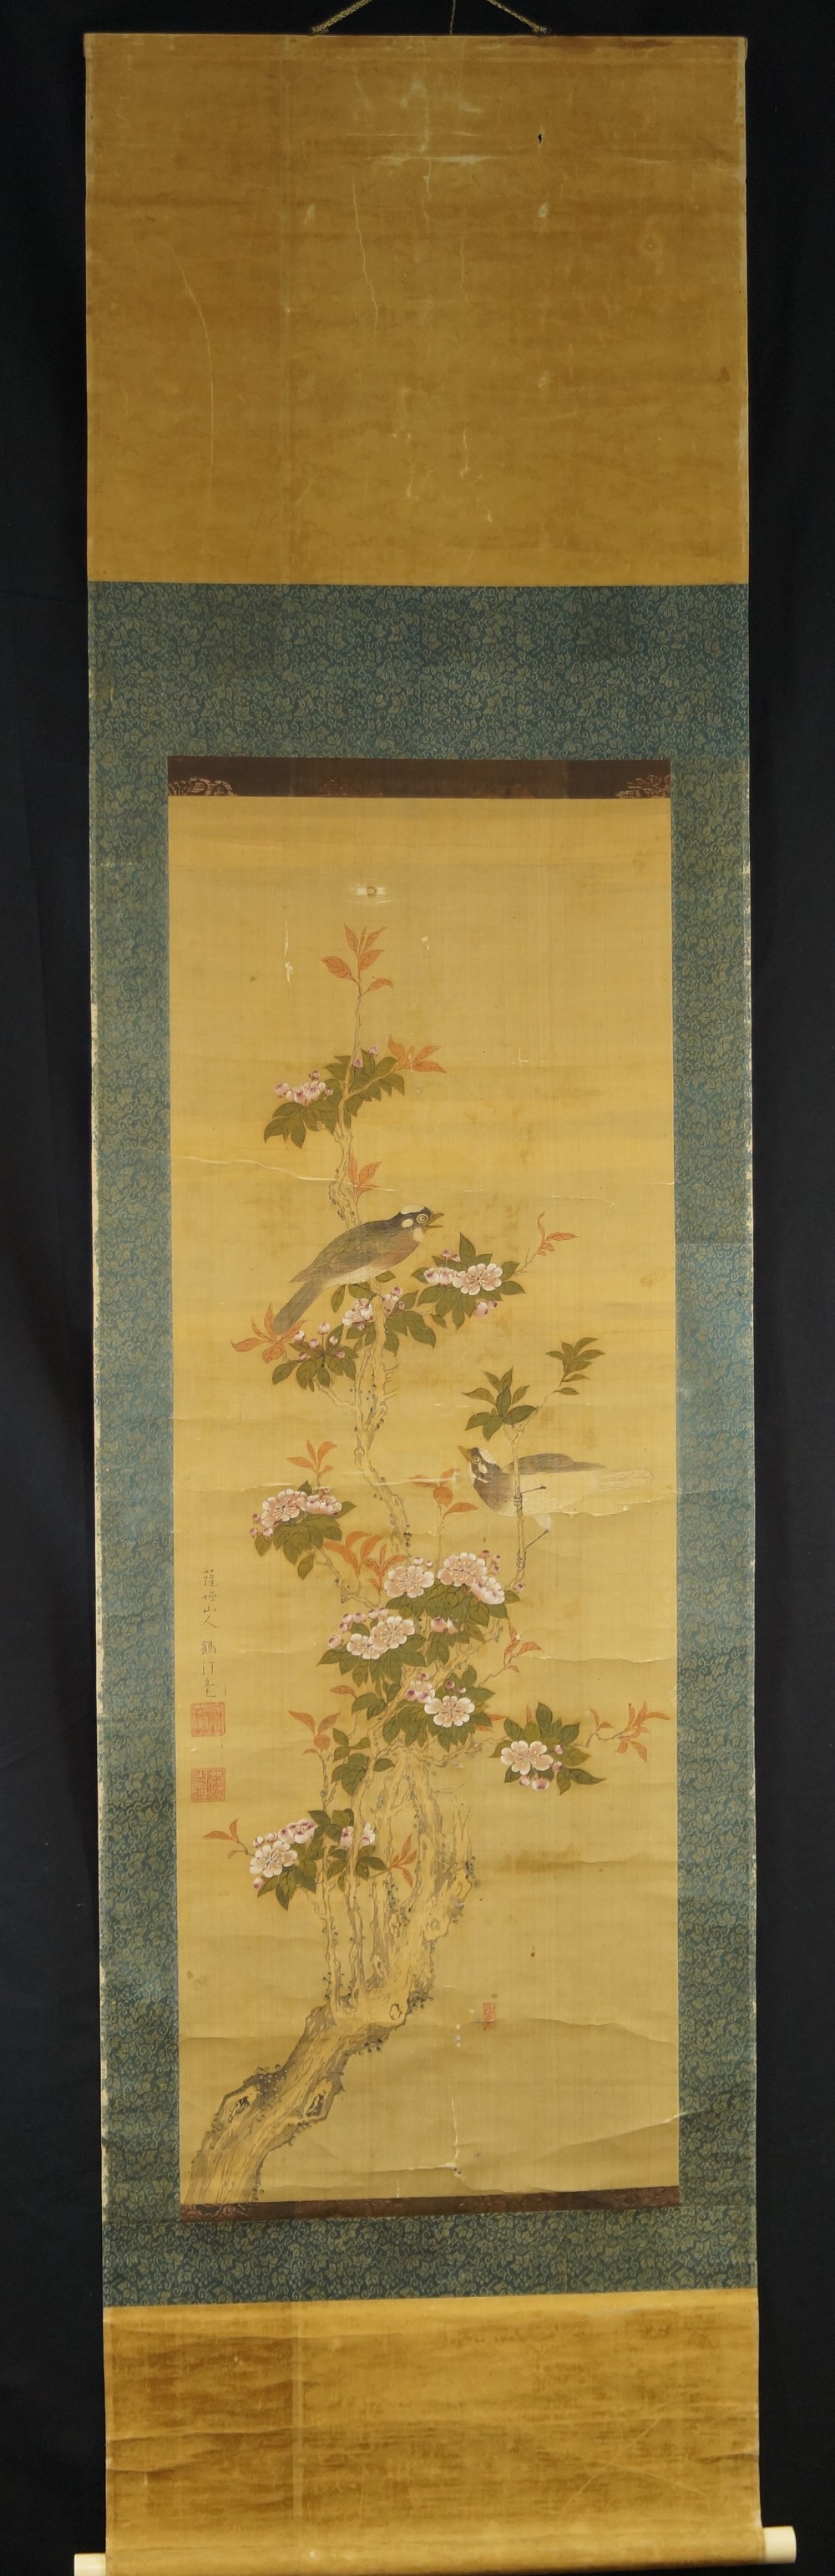 Vögel und Blumen - Japanisches Rollbild (Kakejiku, Kakemono)